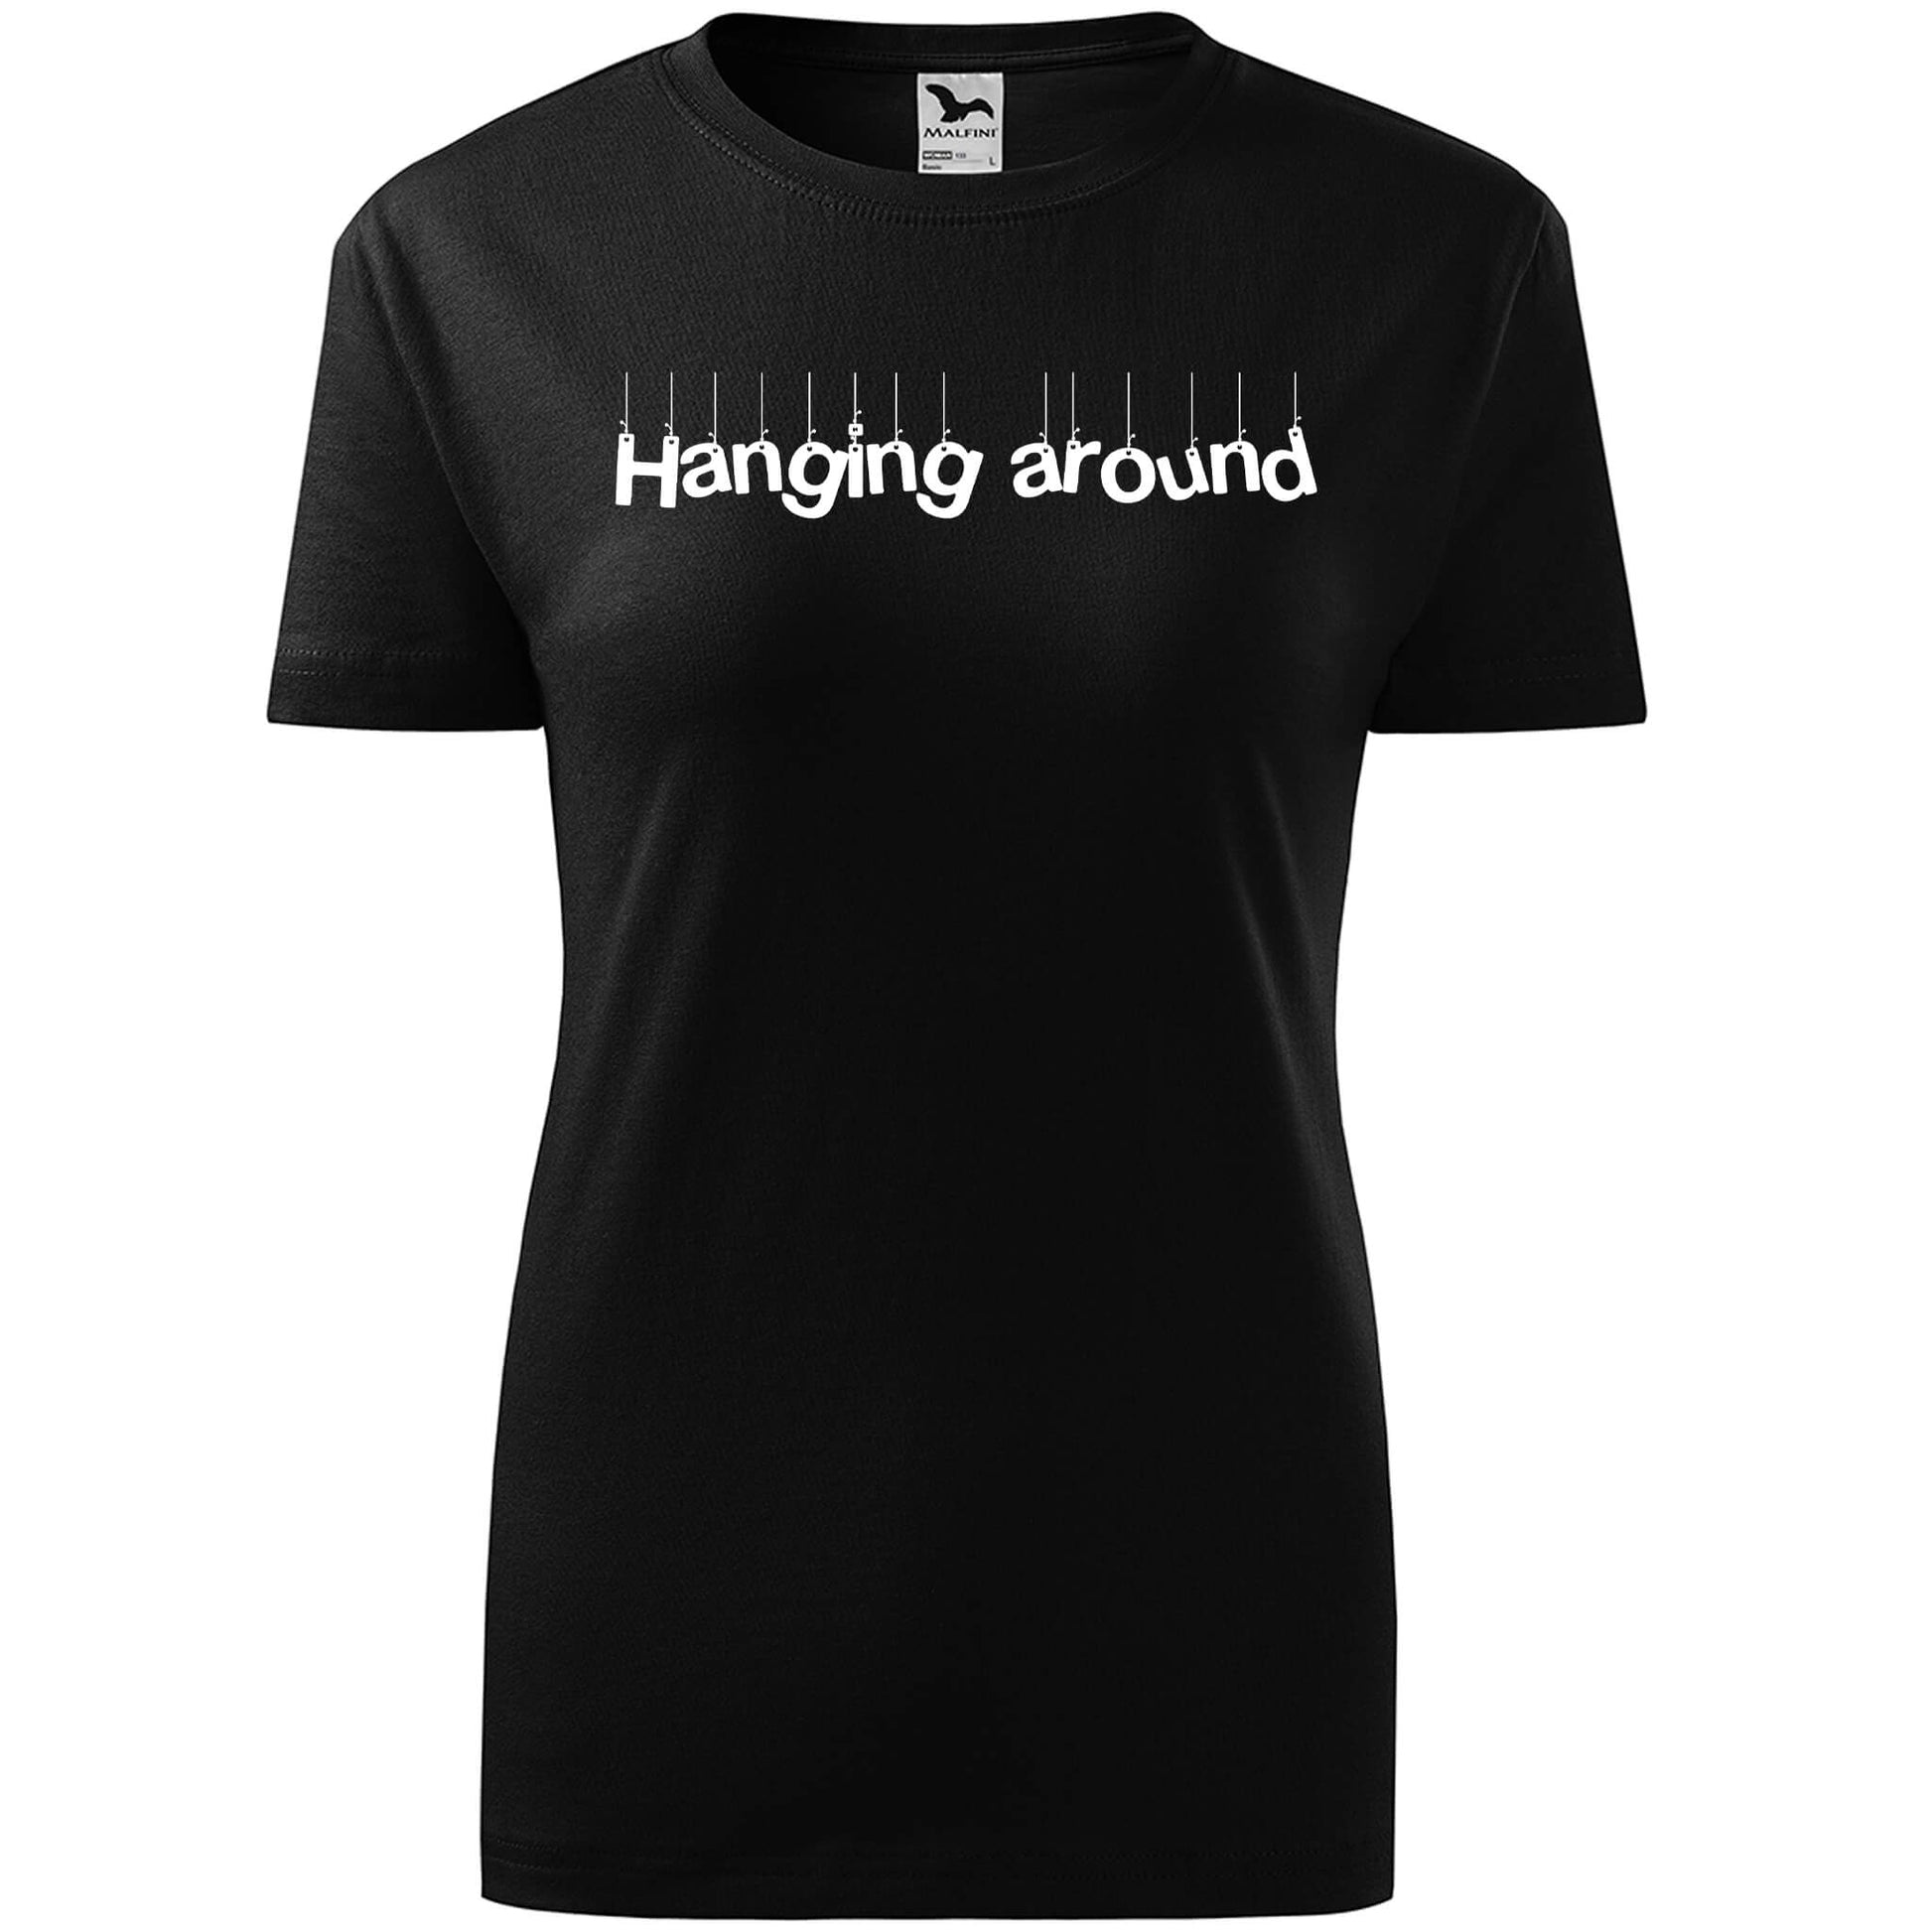 T-shirt - Hanging around - rvdesignprint